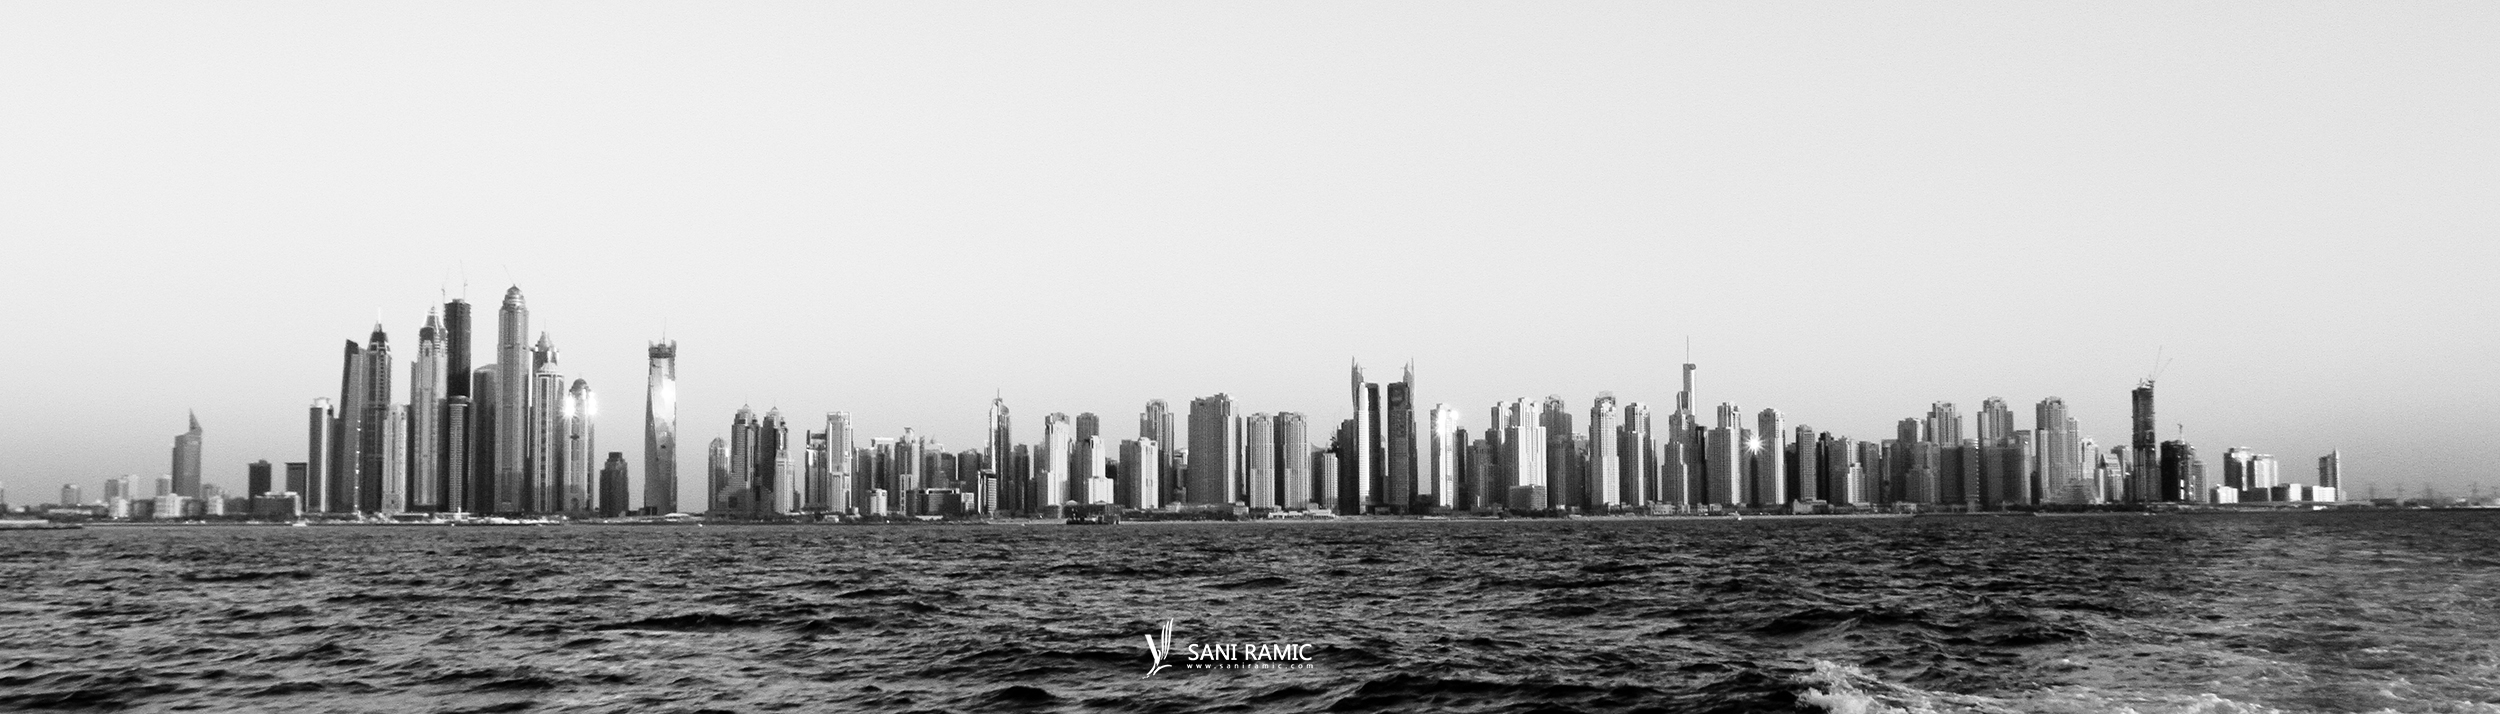 Skyline of Dubai | Sani Ramic Photography & Design